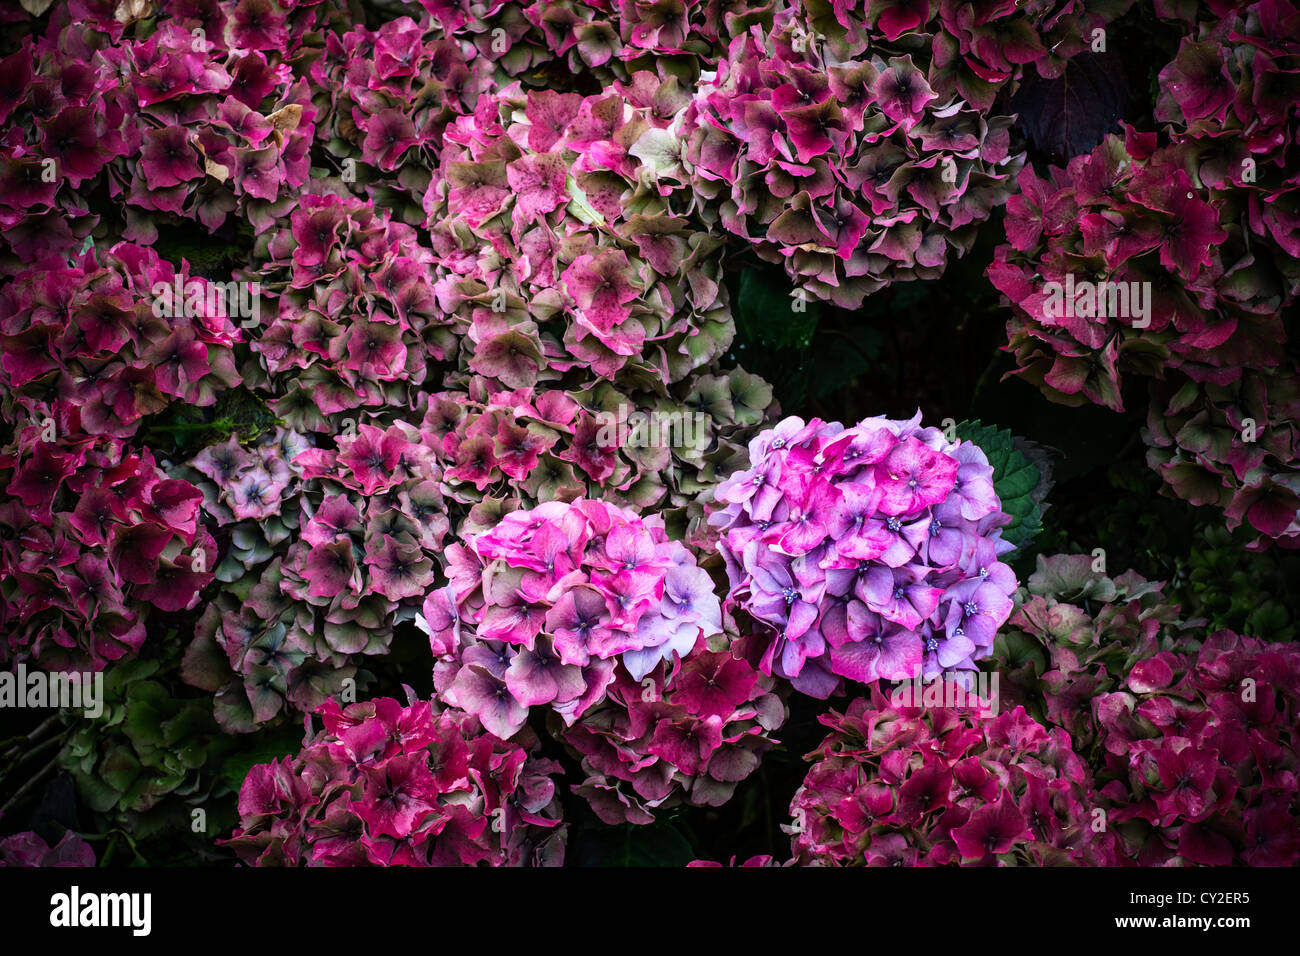 A Hydrangea shrub changing color through the autumn season Stock Photo